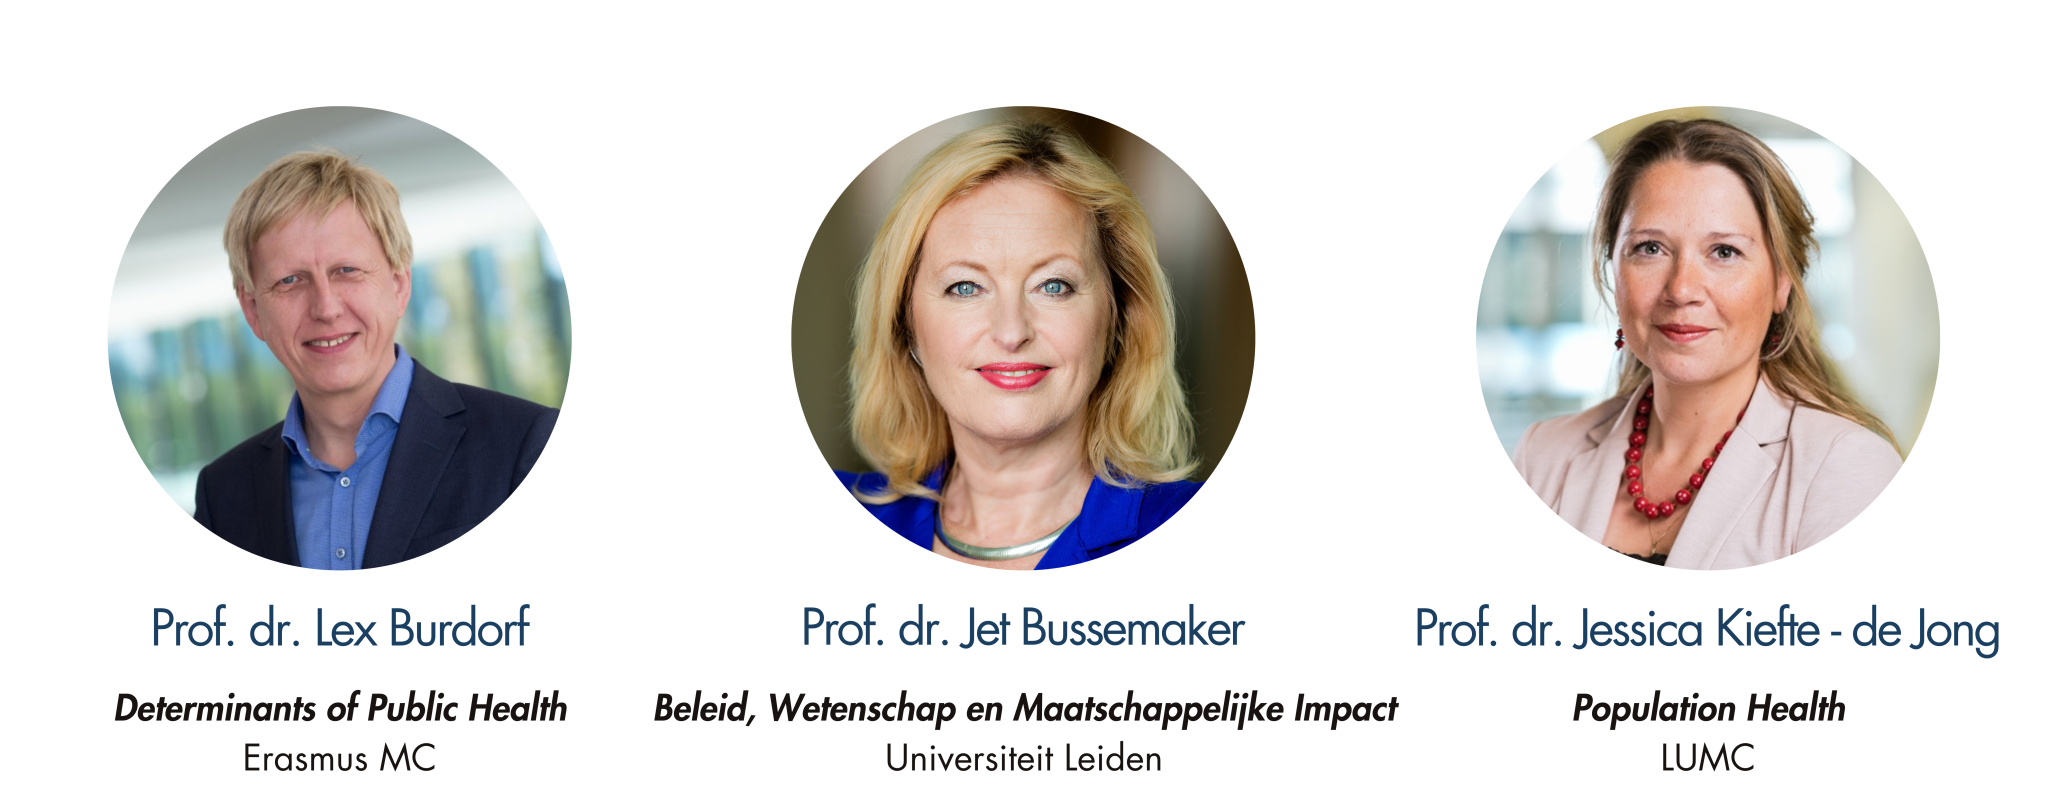 Prof. dr. Jessica Kiefte - de Jong, Prof. dr. Lex Burdorf, Prof. dr. Jet Bussemaker